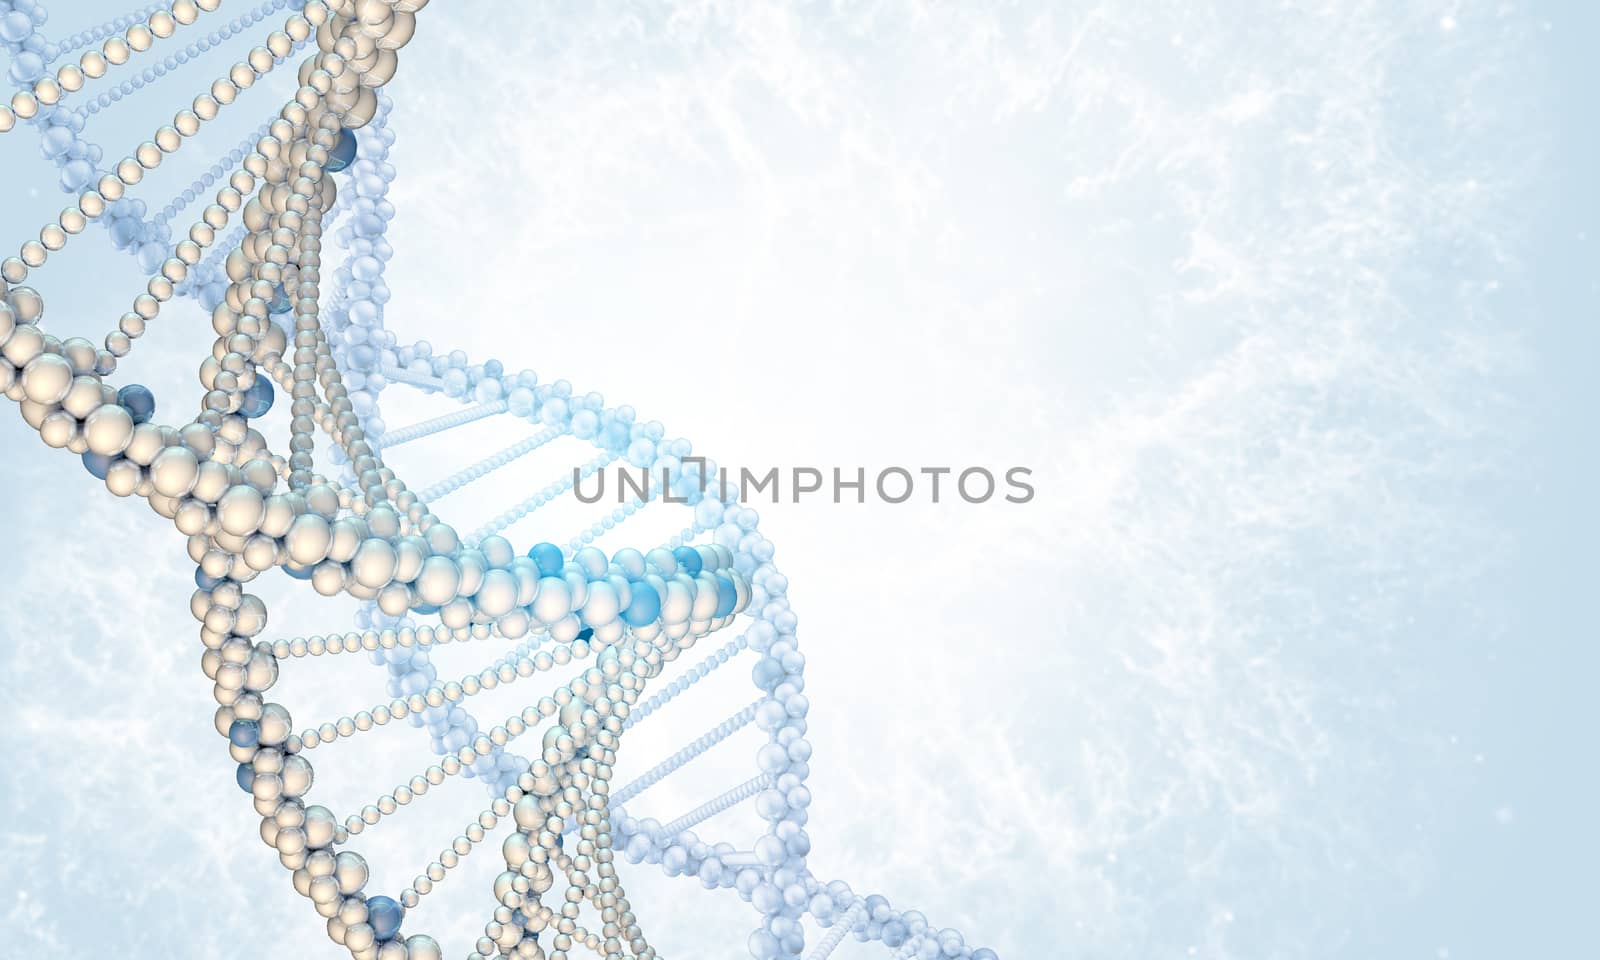 DNA model by cherezoff